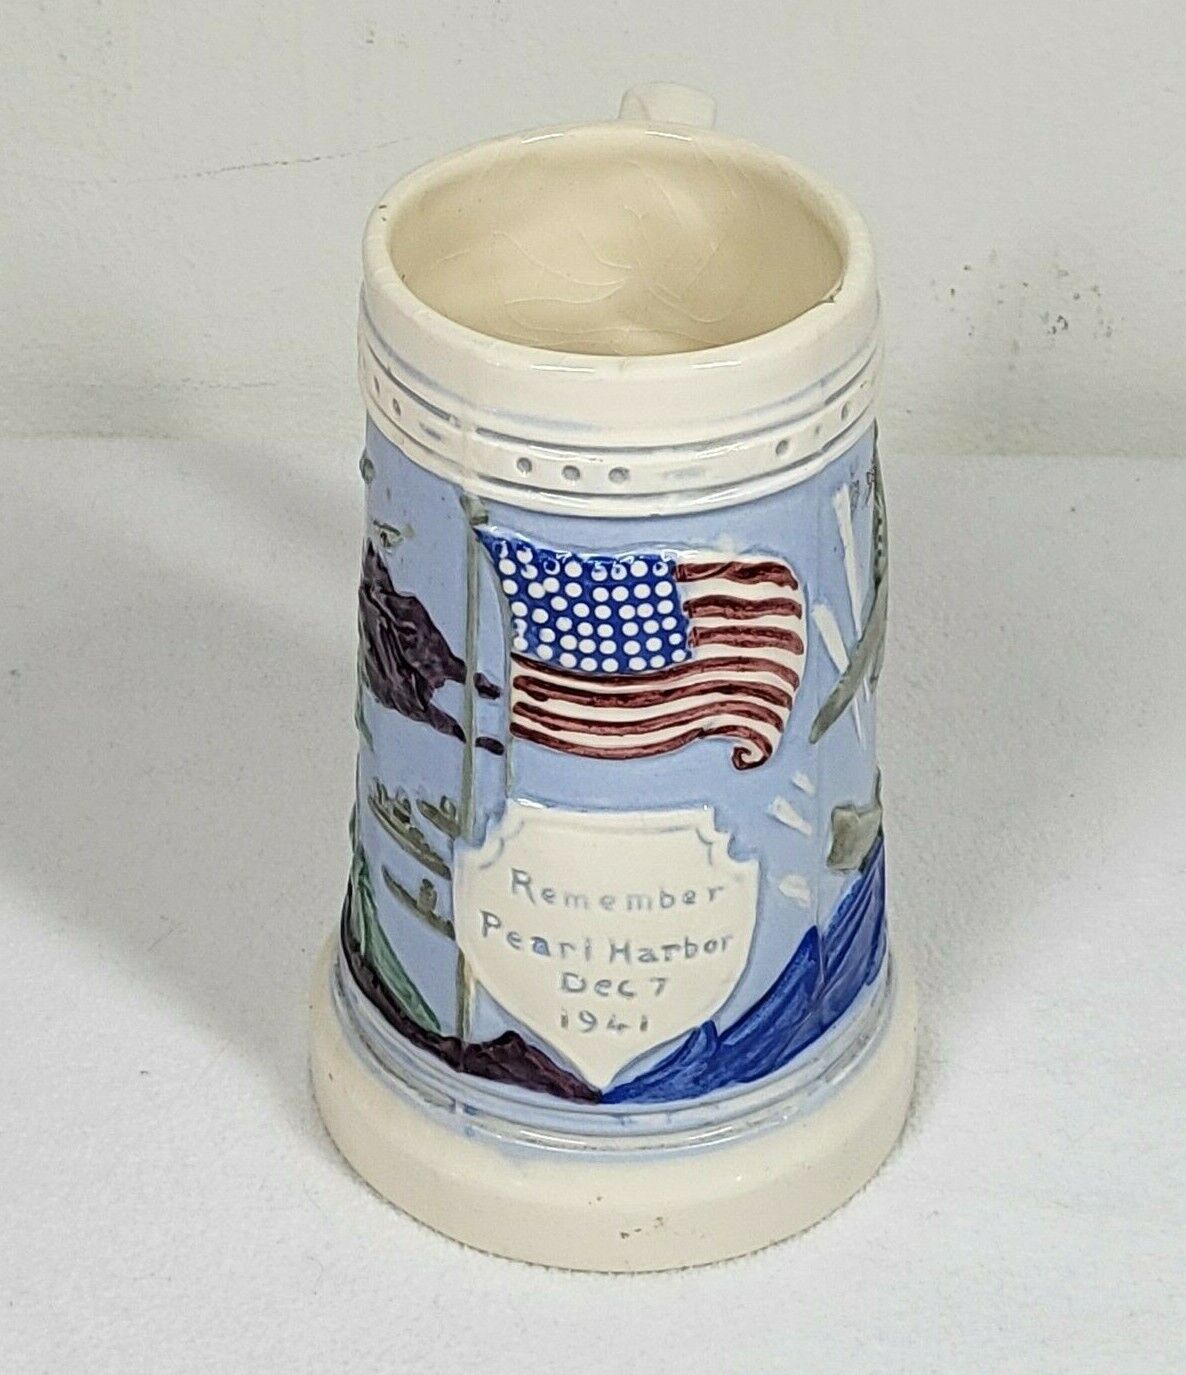 Remember Pearl Harbor Mug Vintage Metlox Poppytrail Dec 7 1941 WWII Stein MCM